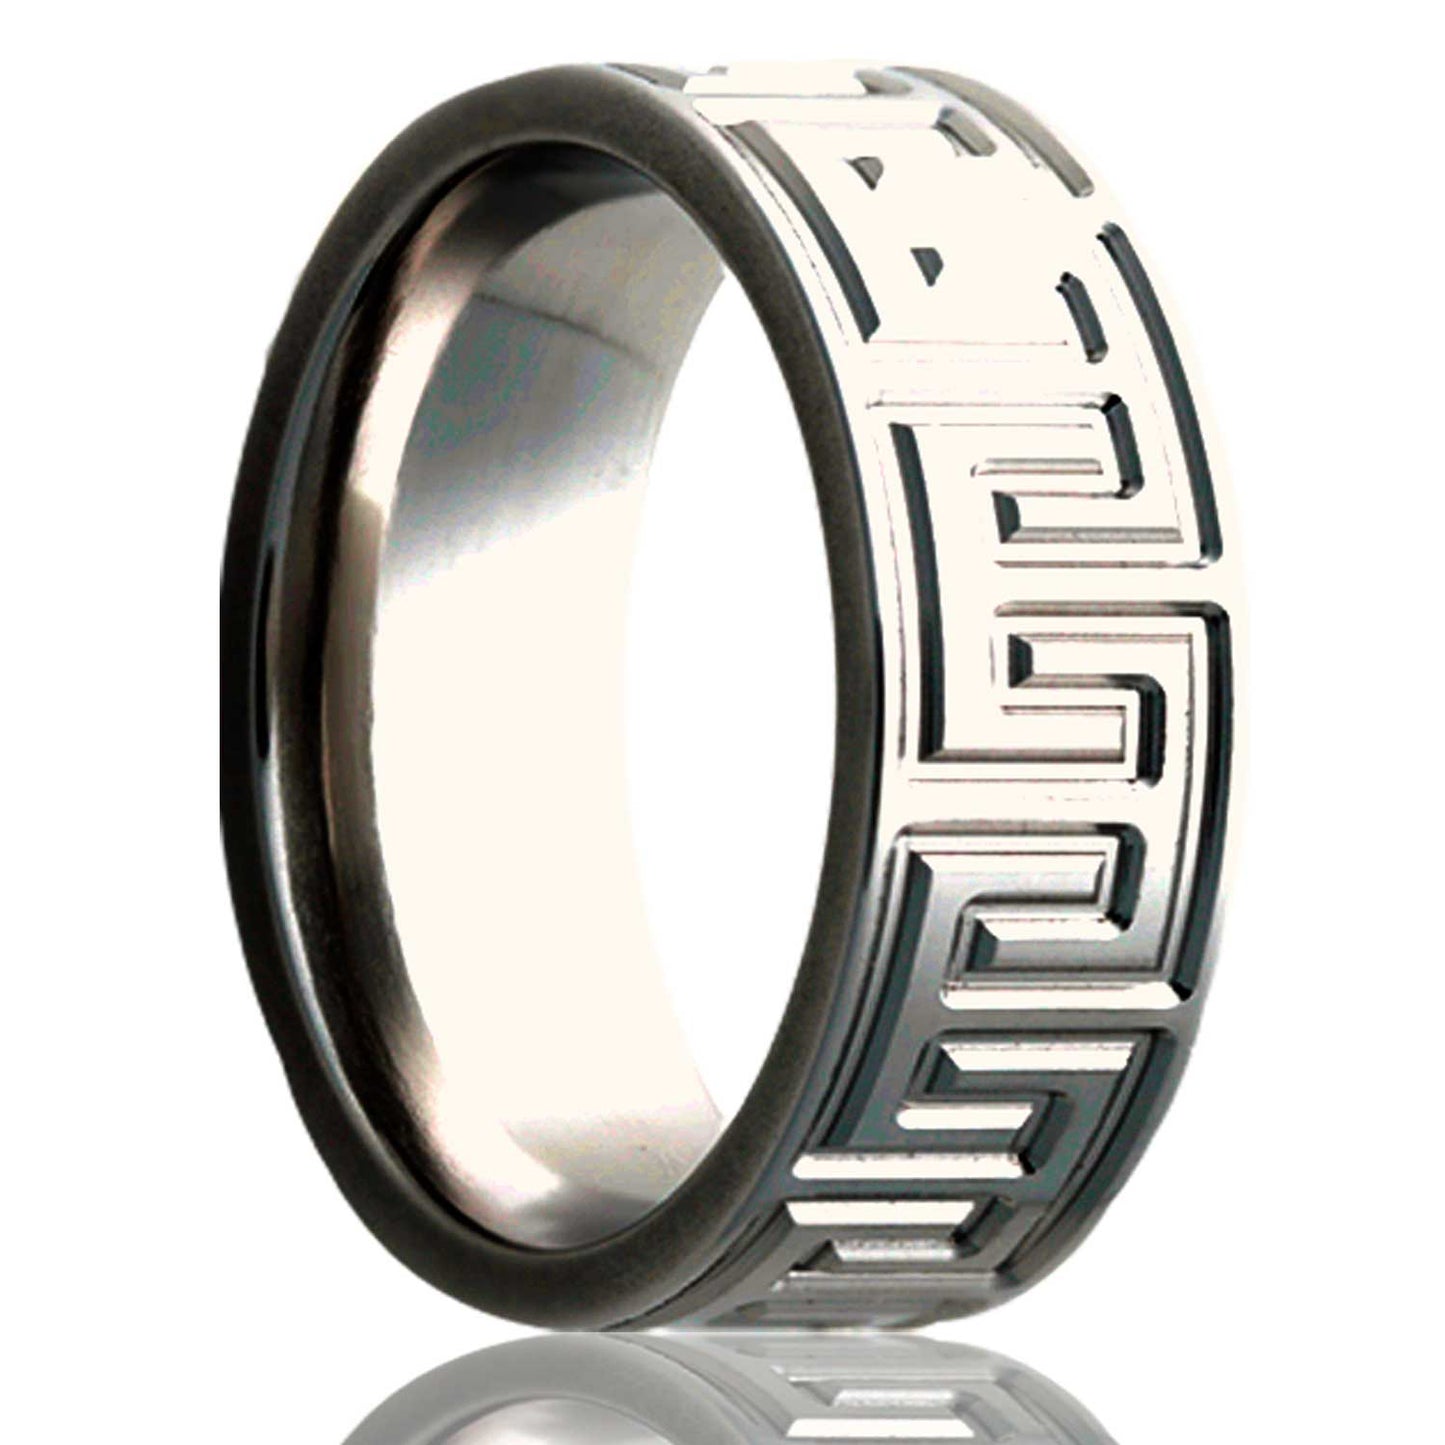 A greek key titanium wedding band displayed on a neutral white background.